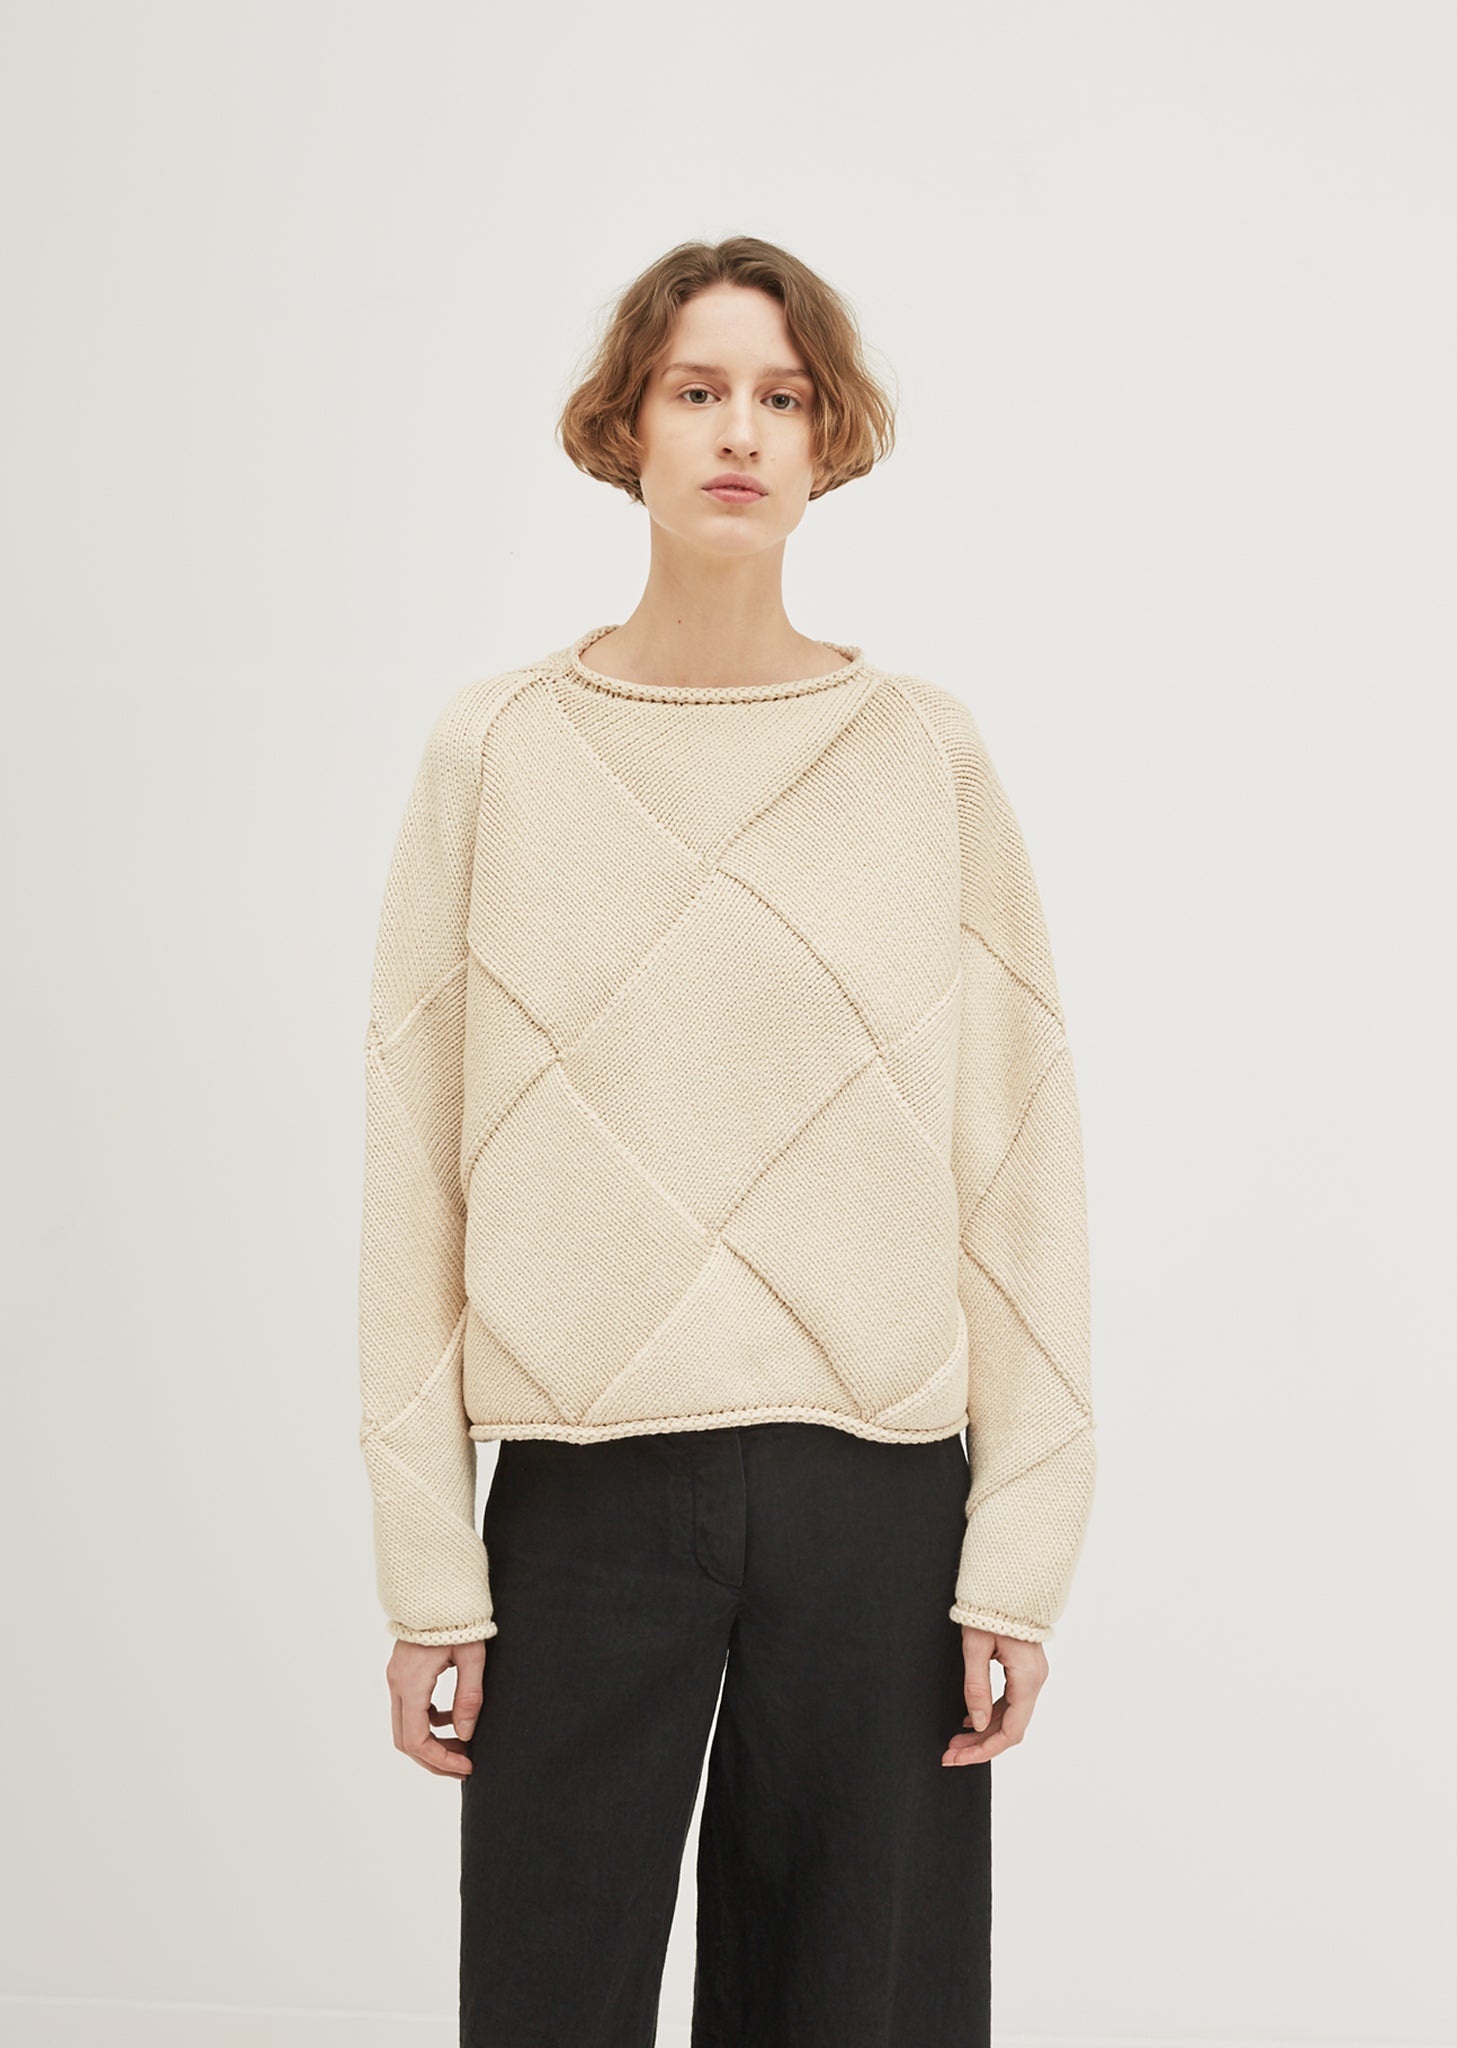 Cotton Merino Entrelac Sweater by Lauren Manoogian- La Garçonne